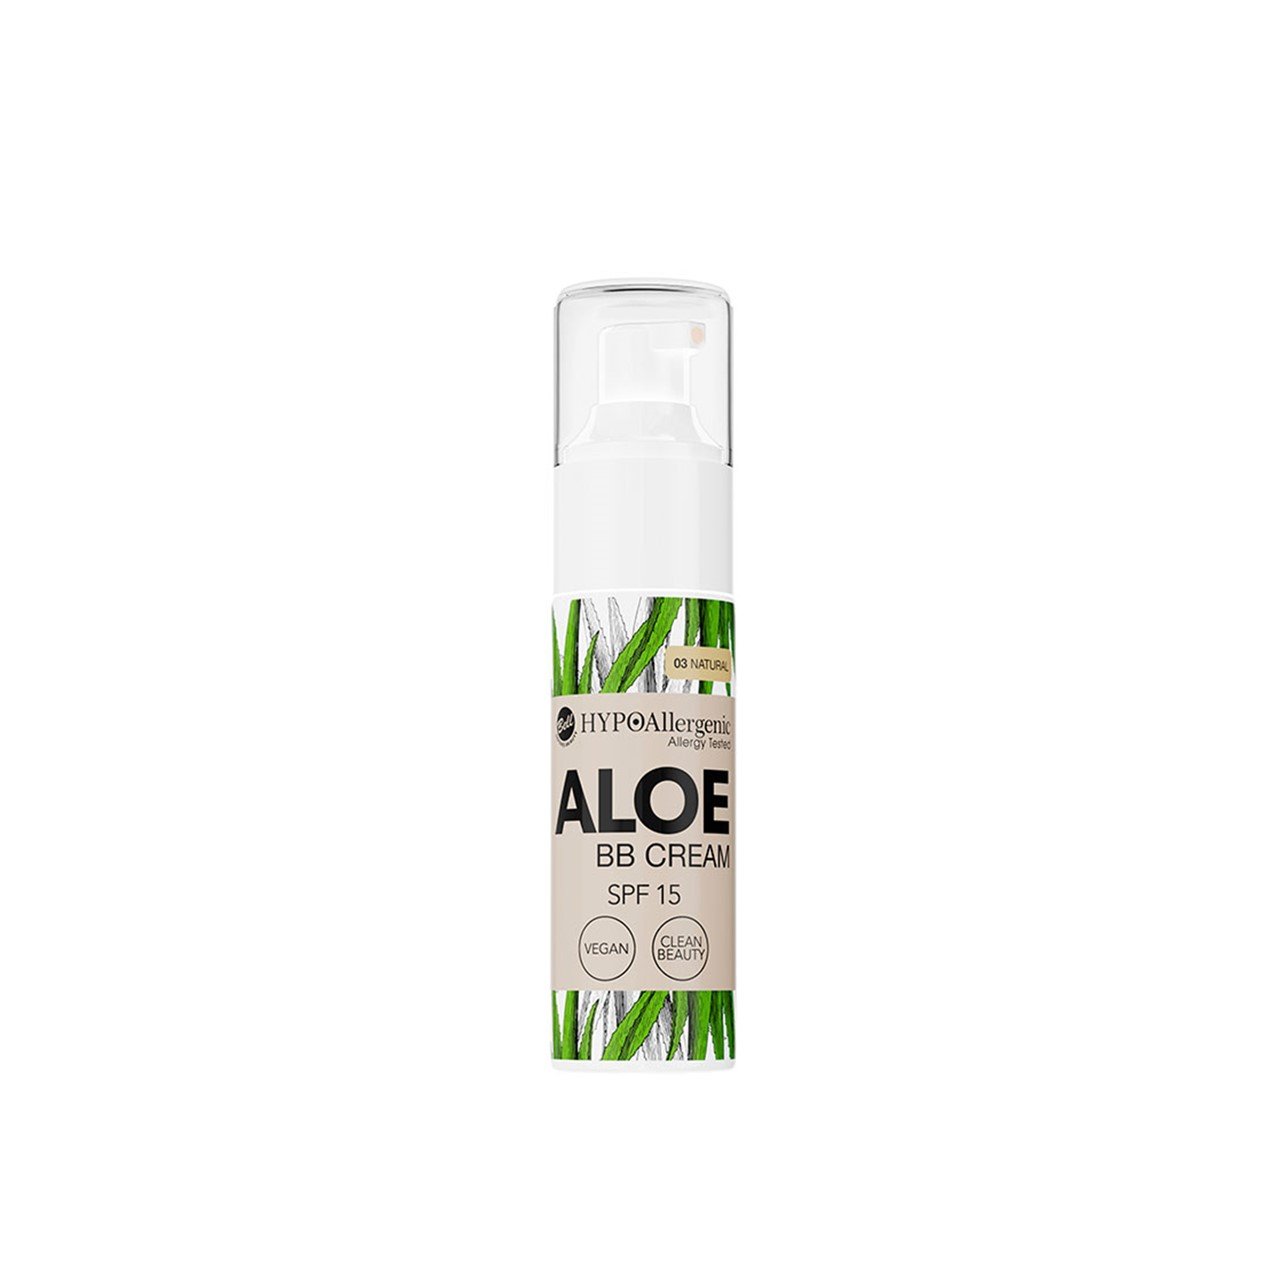 Bell HYPOAllergenic Aloe BB Cream SPF15 03 Natural 20g (0.7 oz)